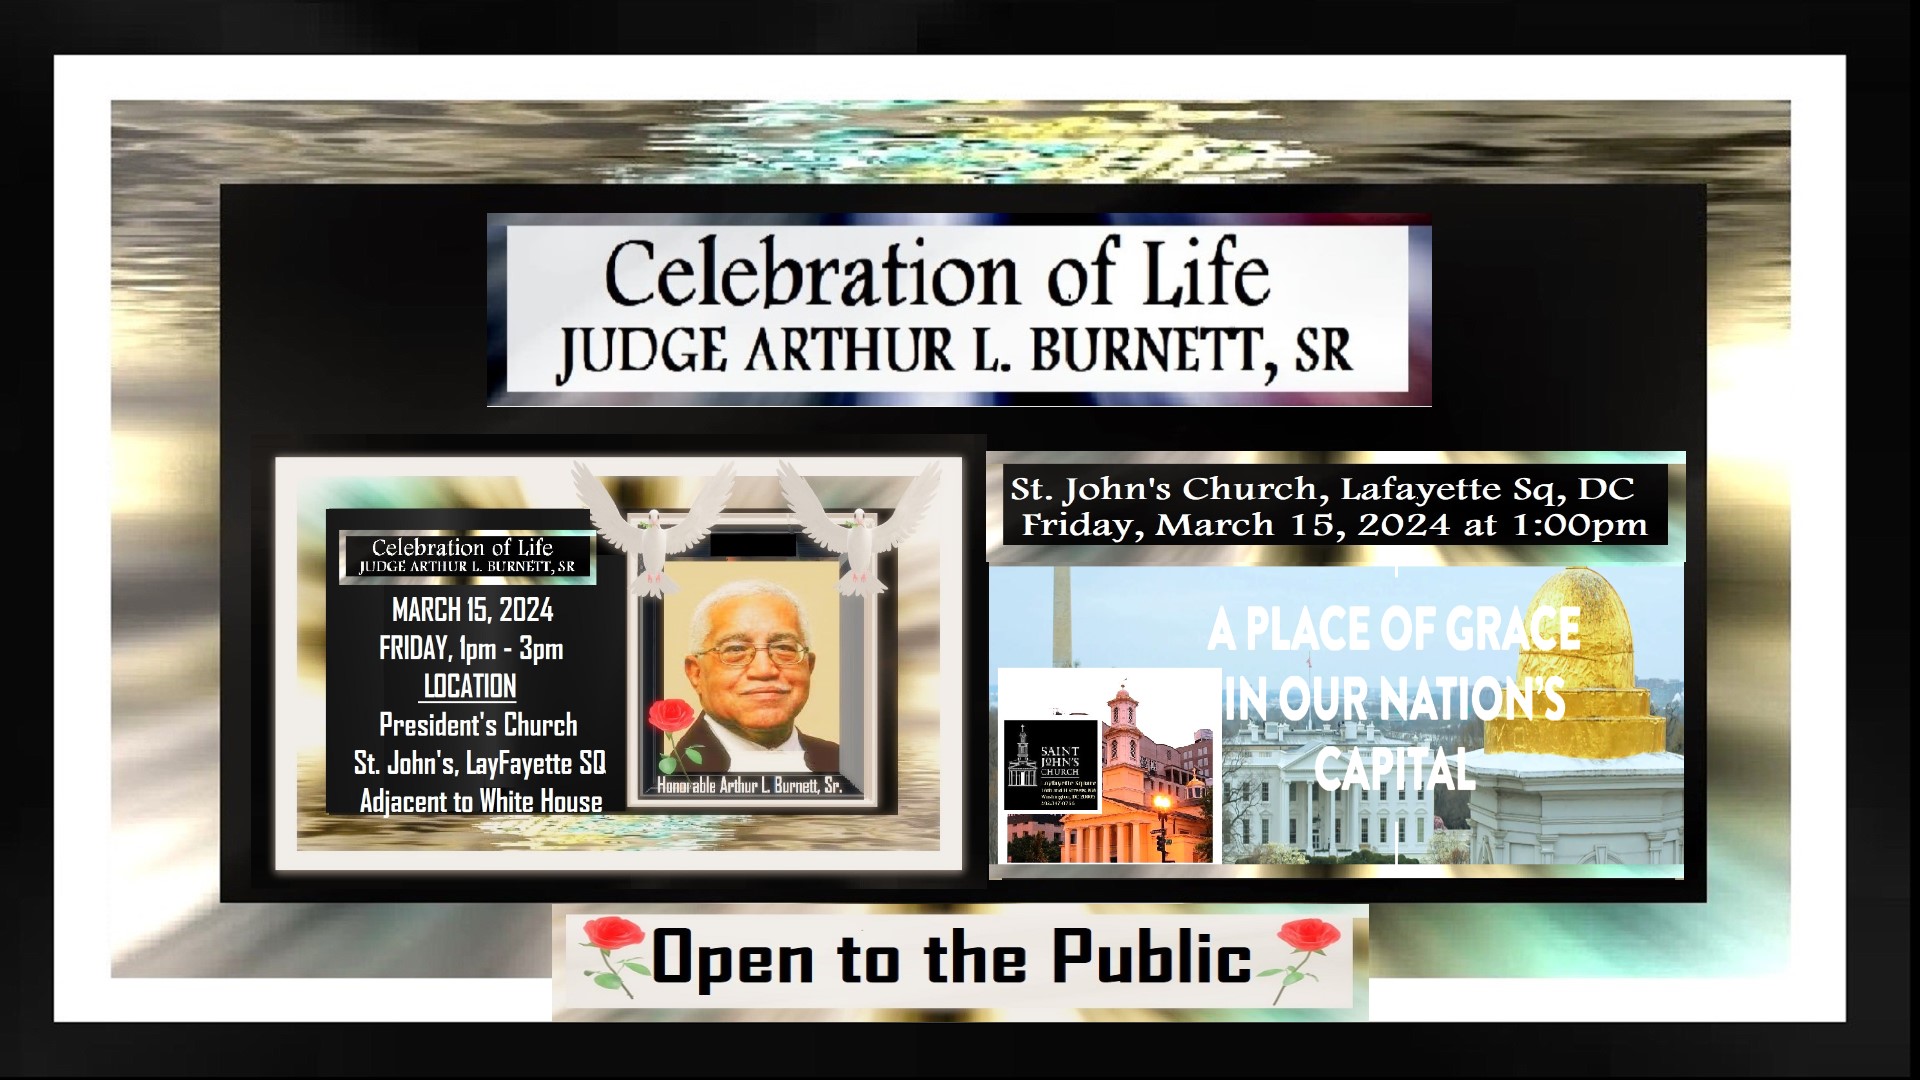 Judge Arthur L. Burnett, Sr. Official Celebration of Life on March 15, 2024